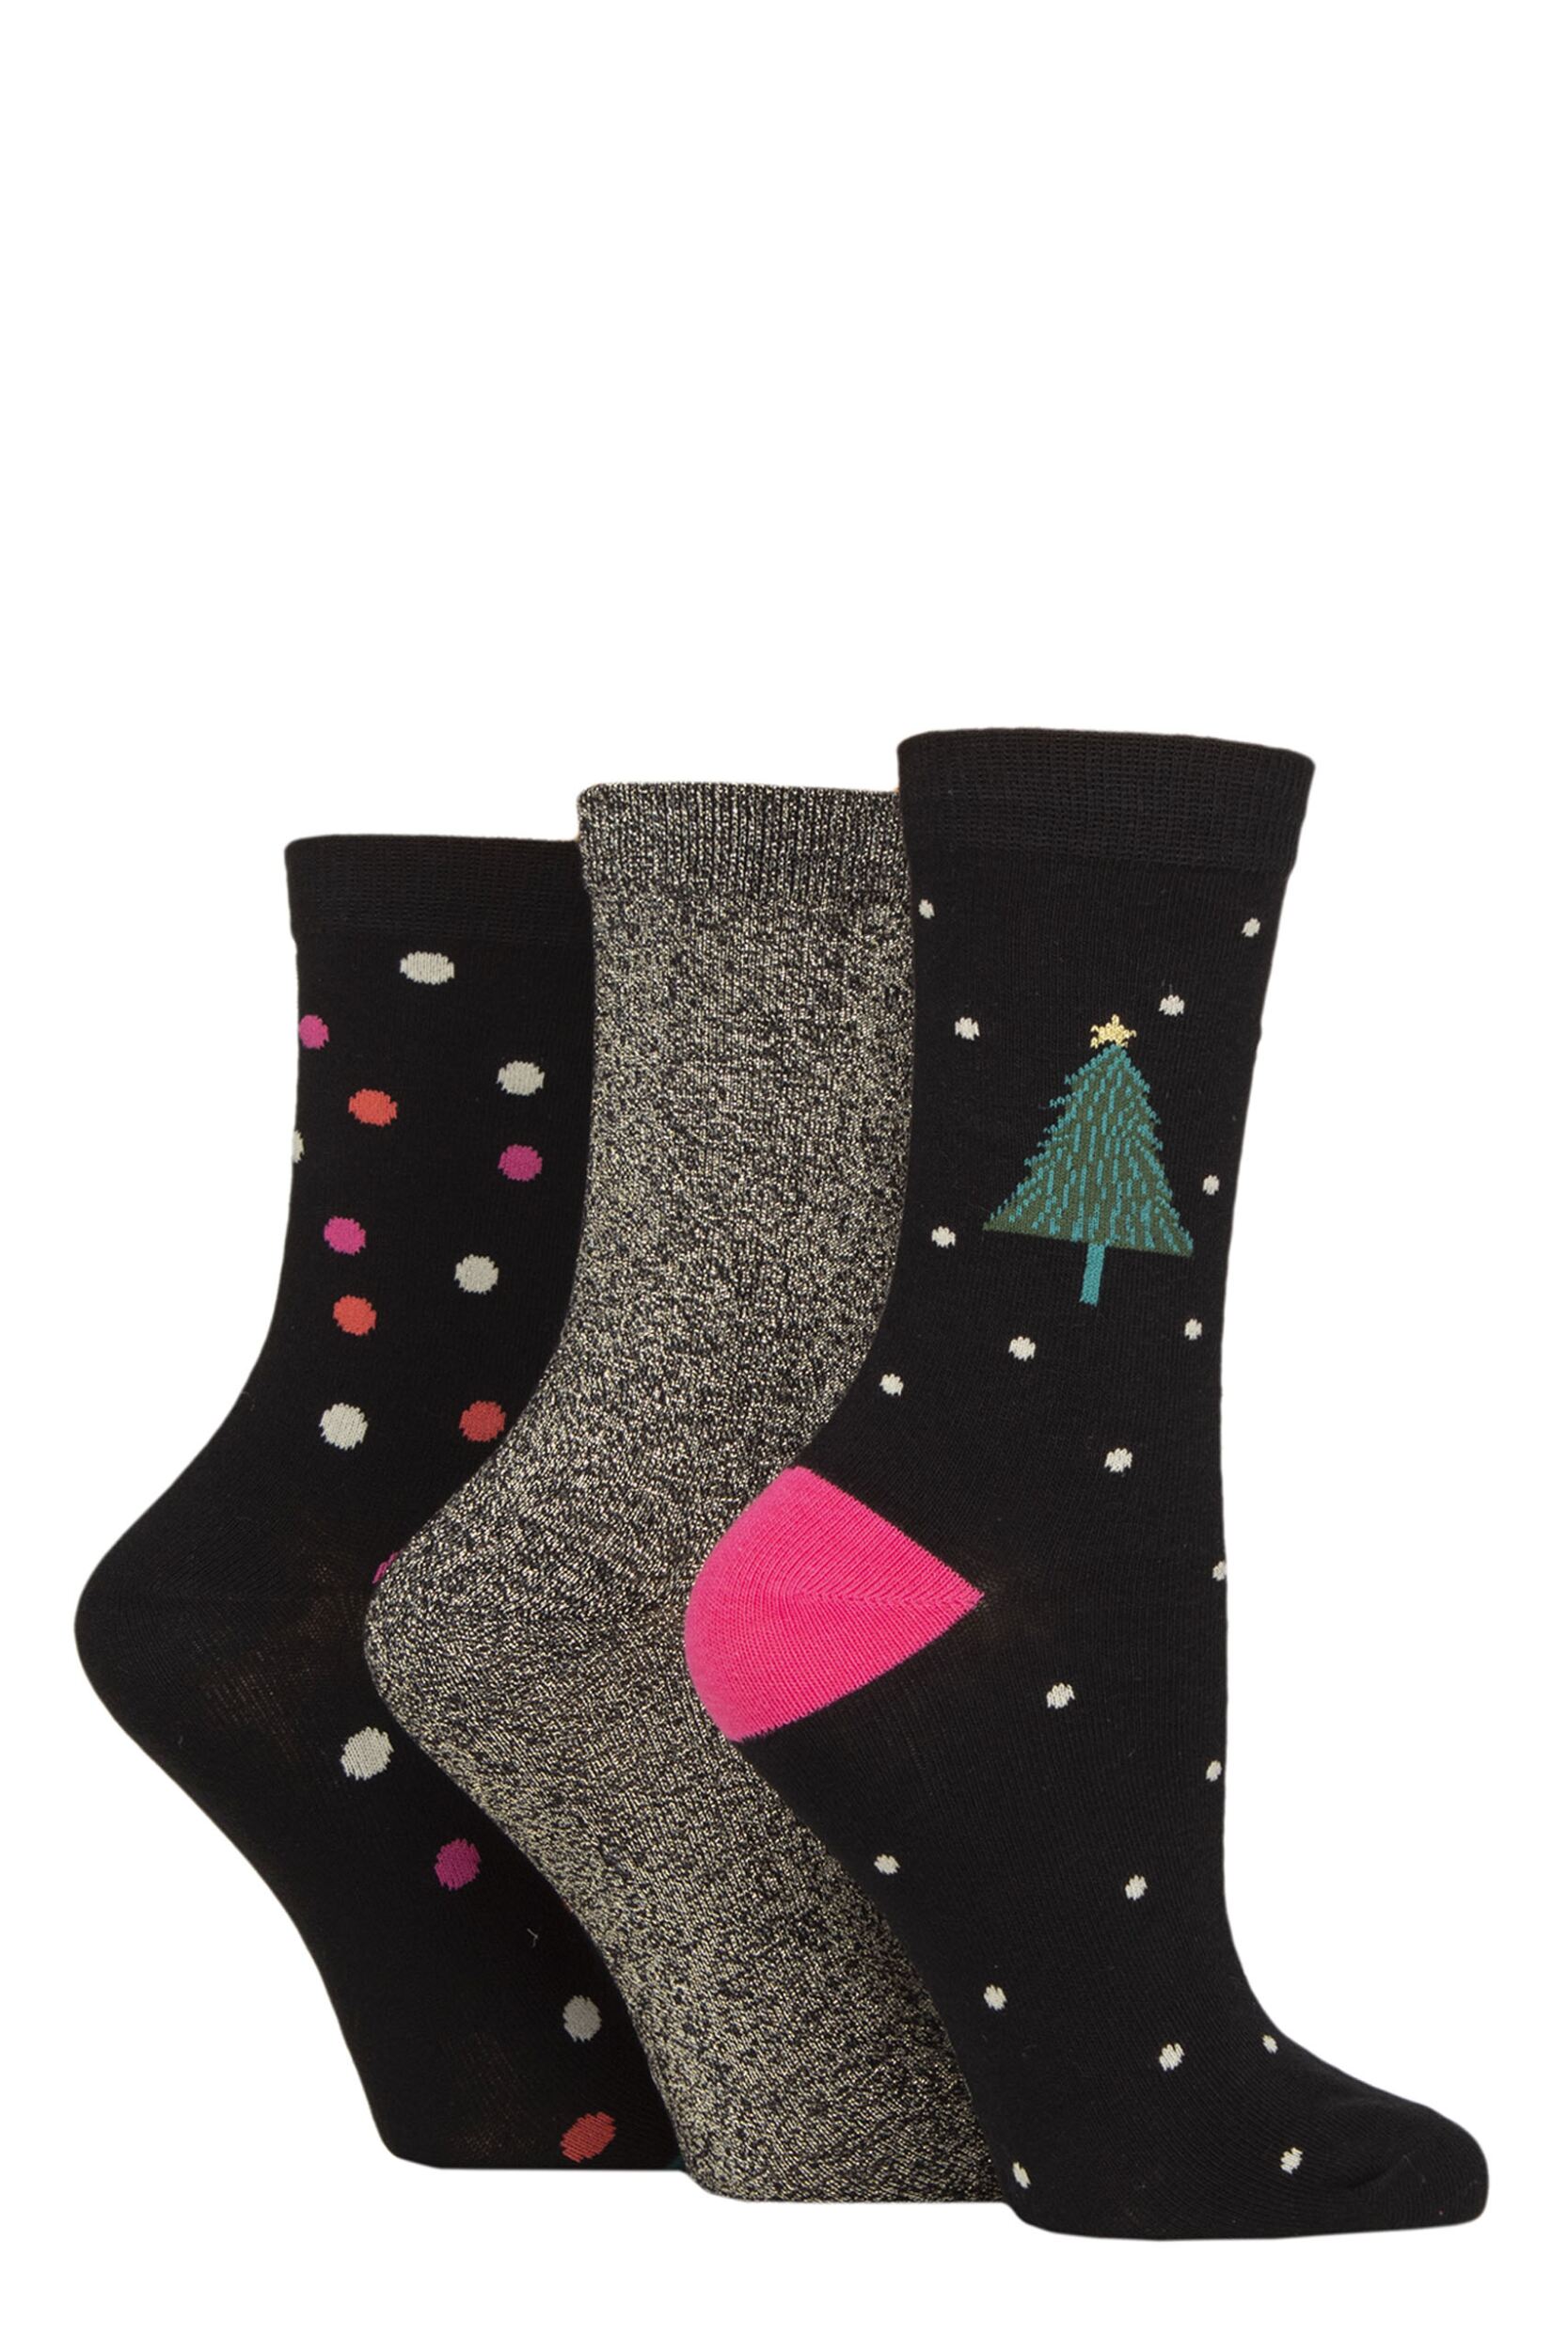 Ladies 3 Pair Caroline Gardner Christmas Patterned Cotton Socks Black Tree/ Glitter / Spot 4-8